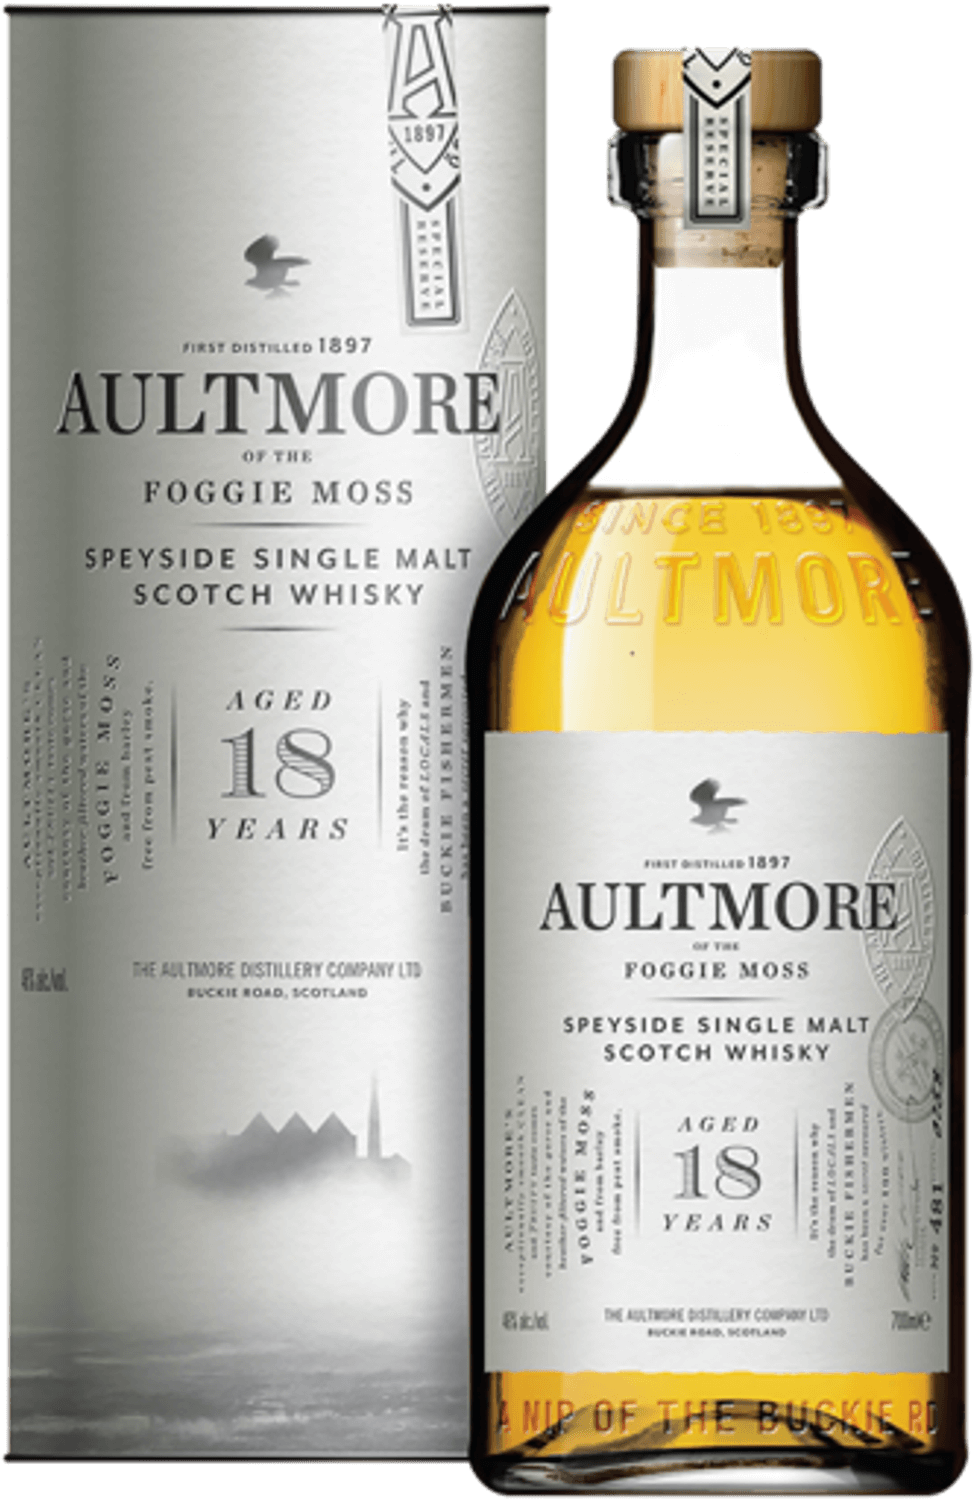 Aultmore 18 Years Old Speyside Single Malt Scotch Whisky (gift box) aultmore 18 years old speyside single malt scotch whisky gift box